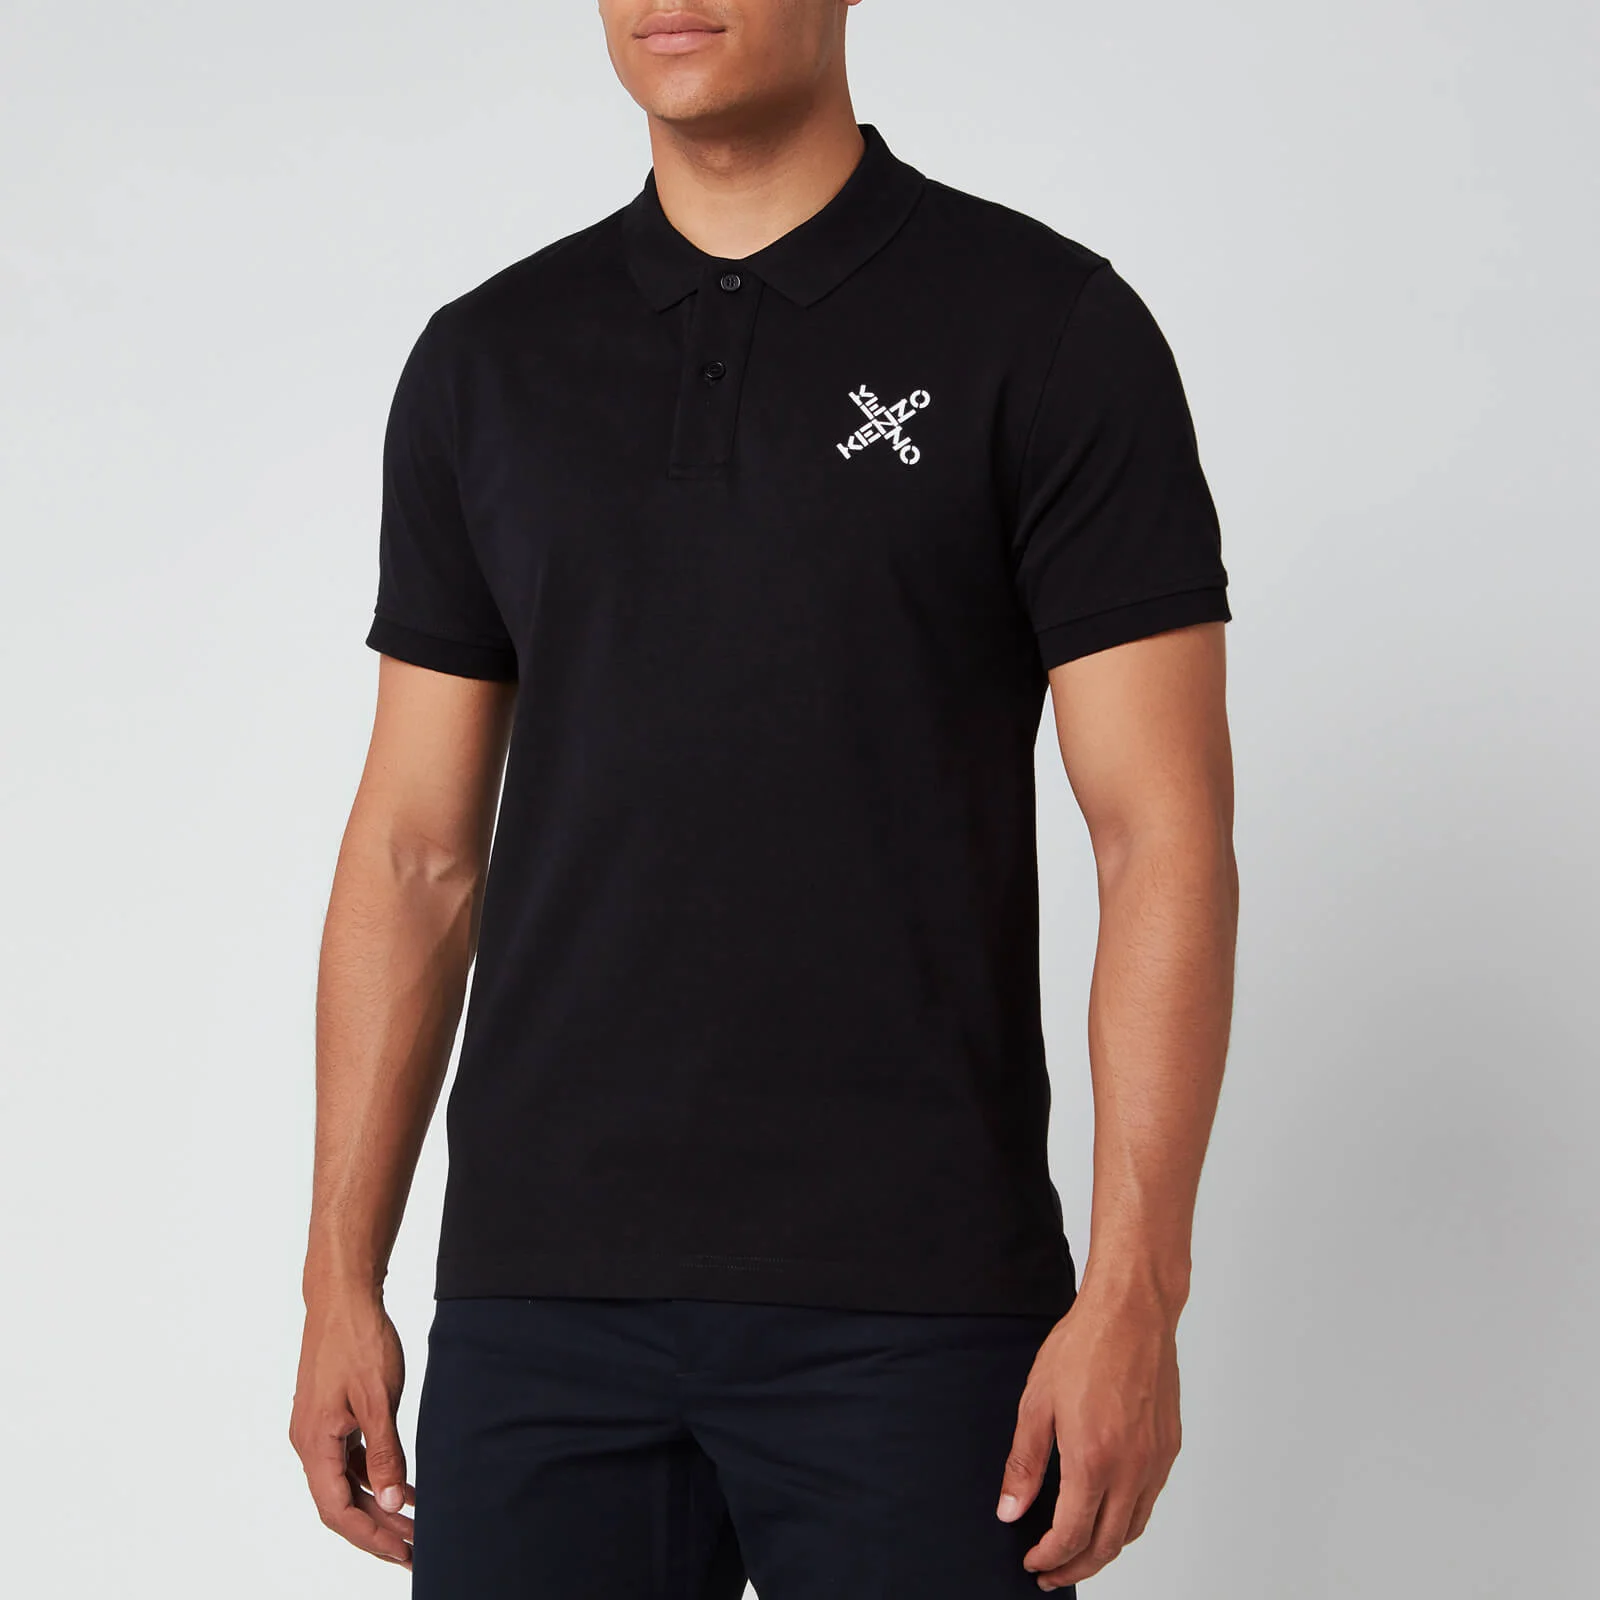 KENZO Men's Sport Polo Shirt - Black Image 1